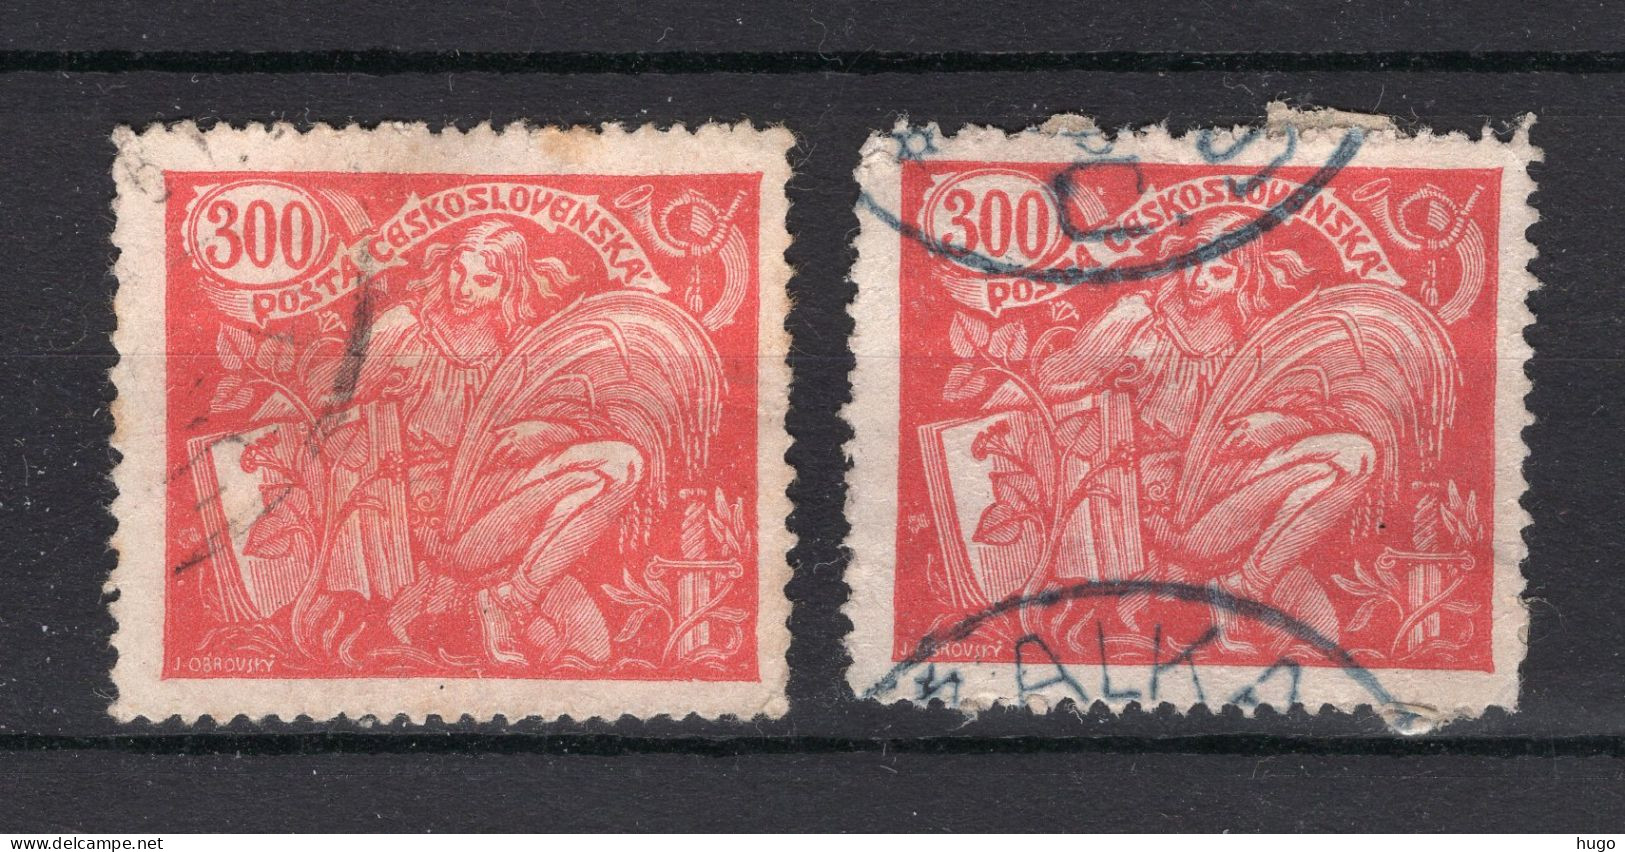 TSJECHOSLOVAKIJE Yt. 178° Gestempeld 1920-1925 - Used Stamps